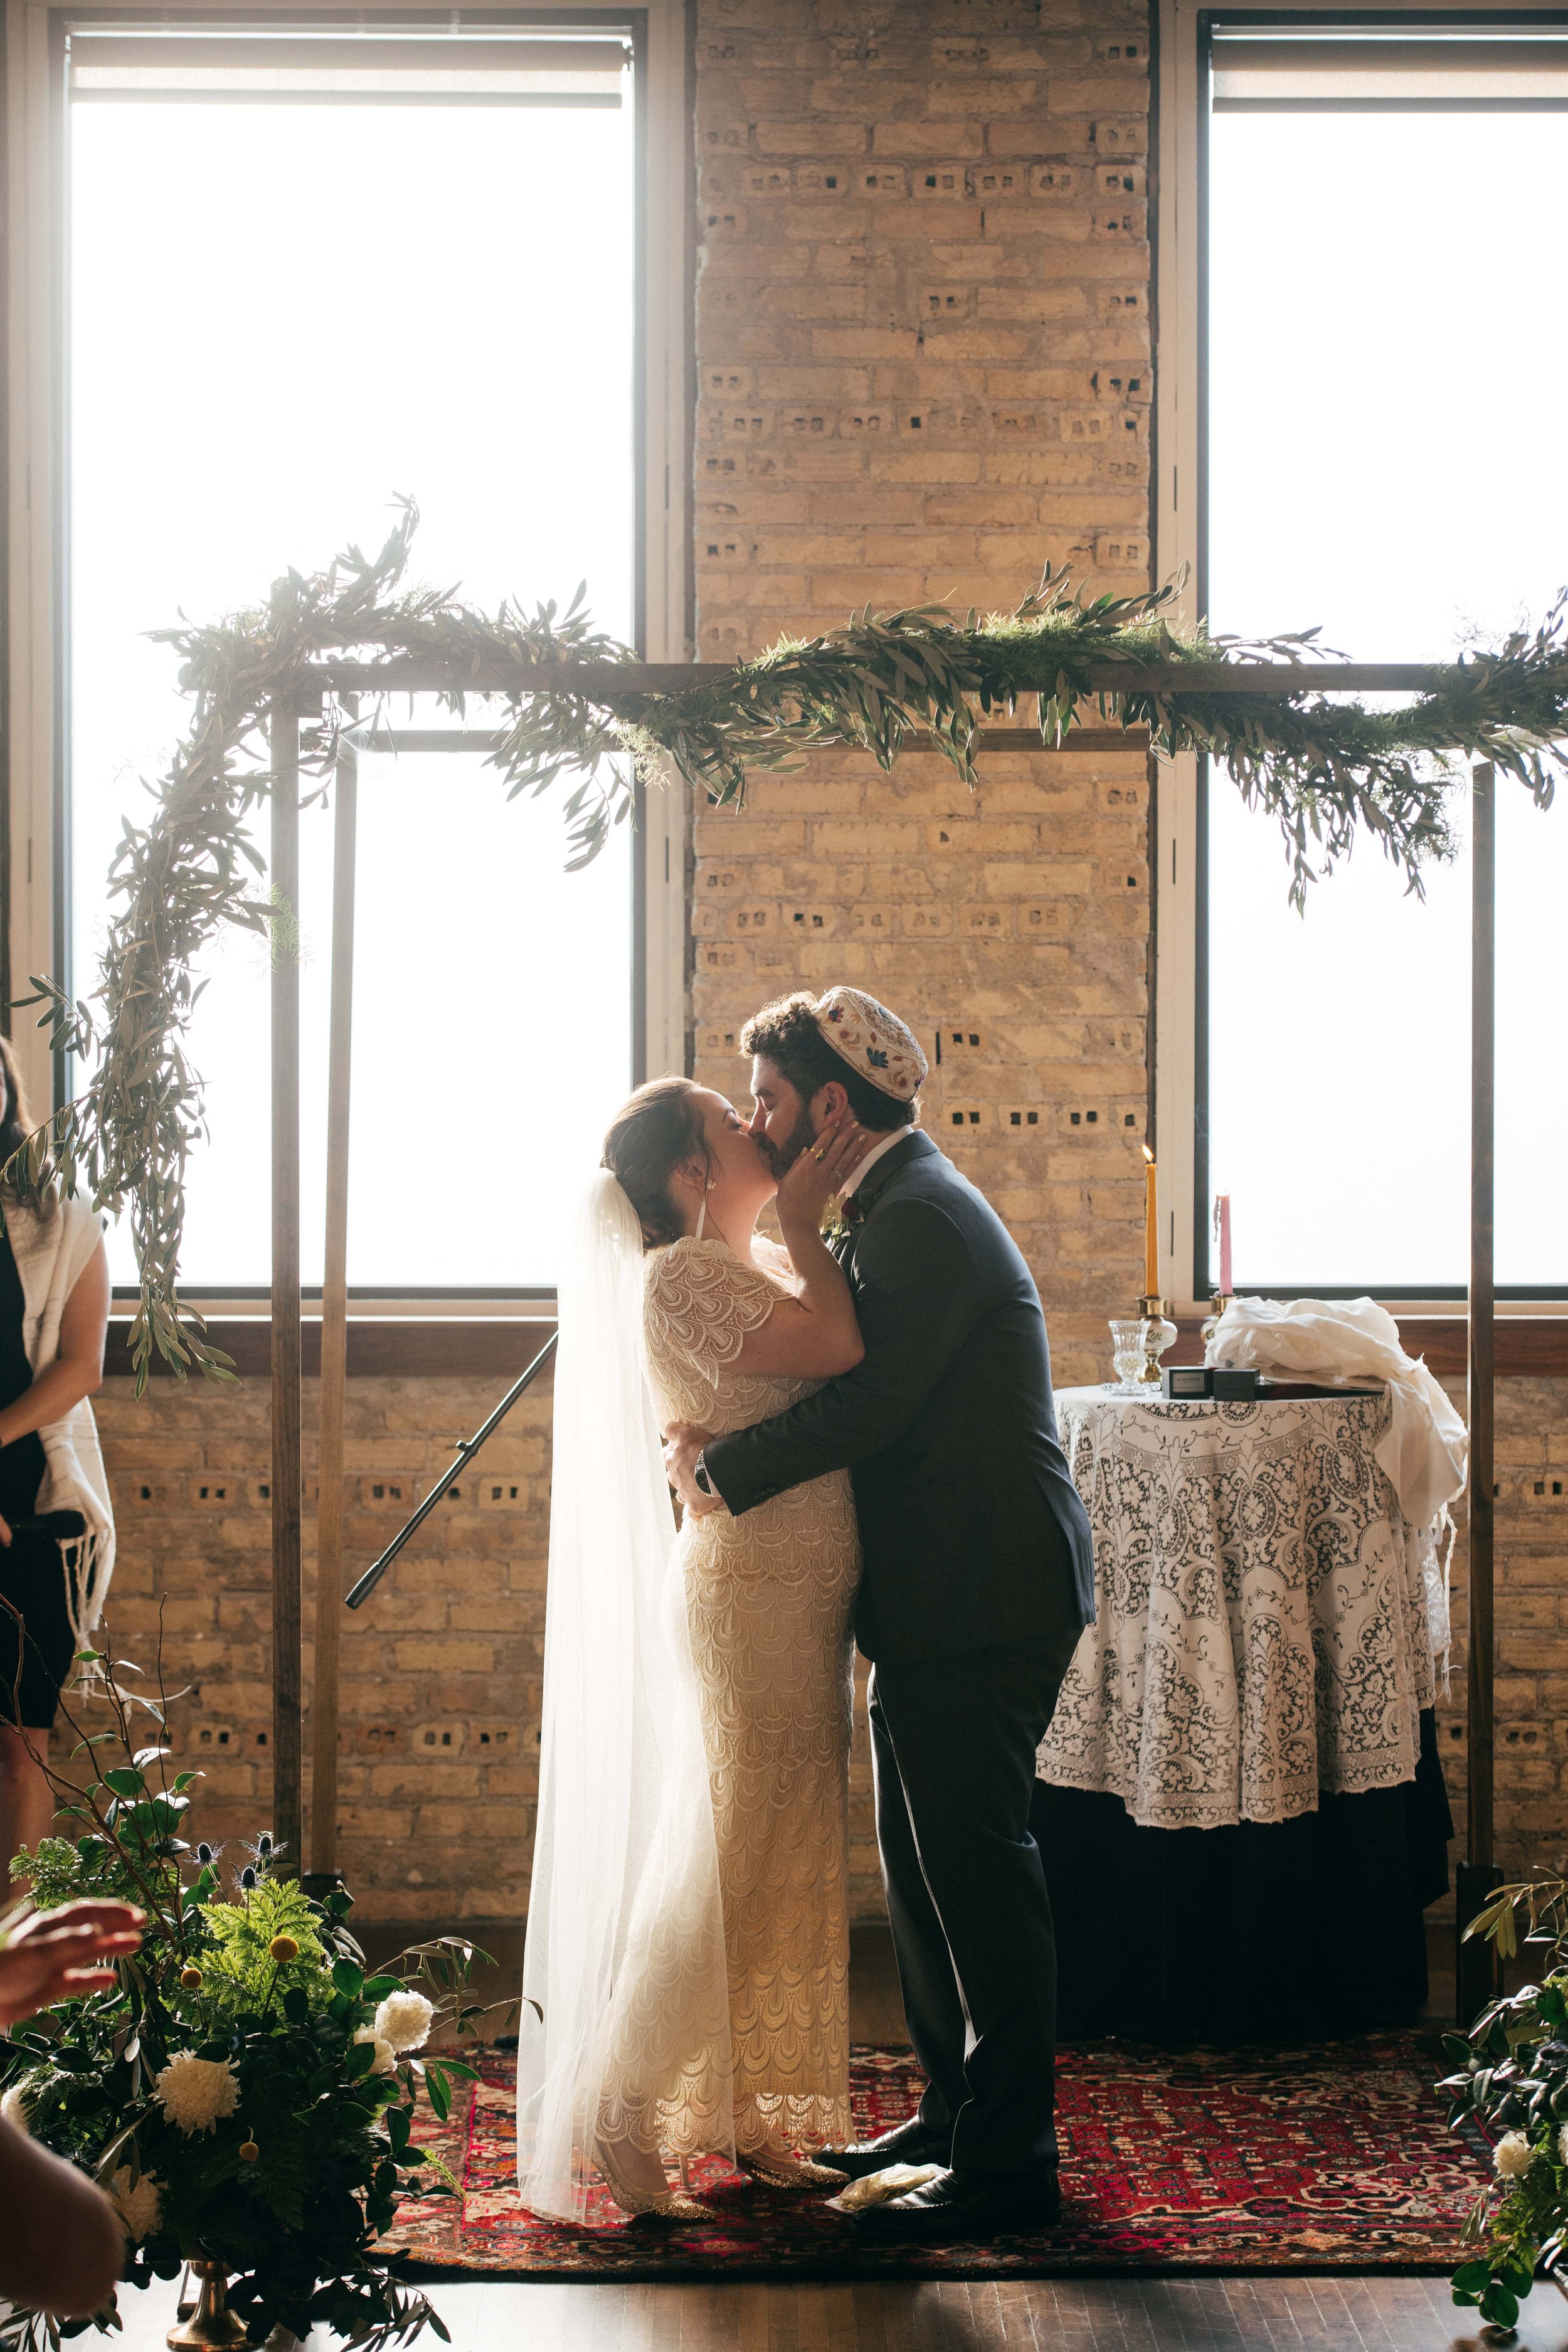 Amazing Graze' Rustic Boho Barn Wedding Inspiration - Boho Wedding Blog